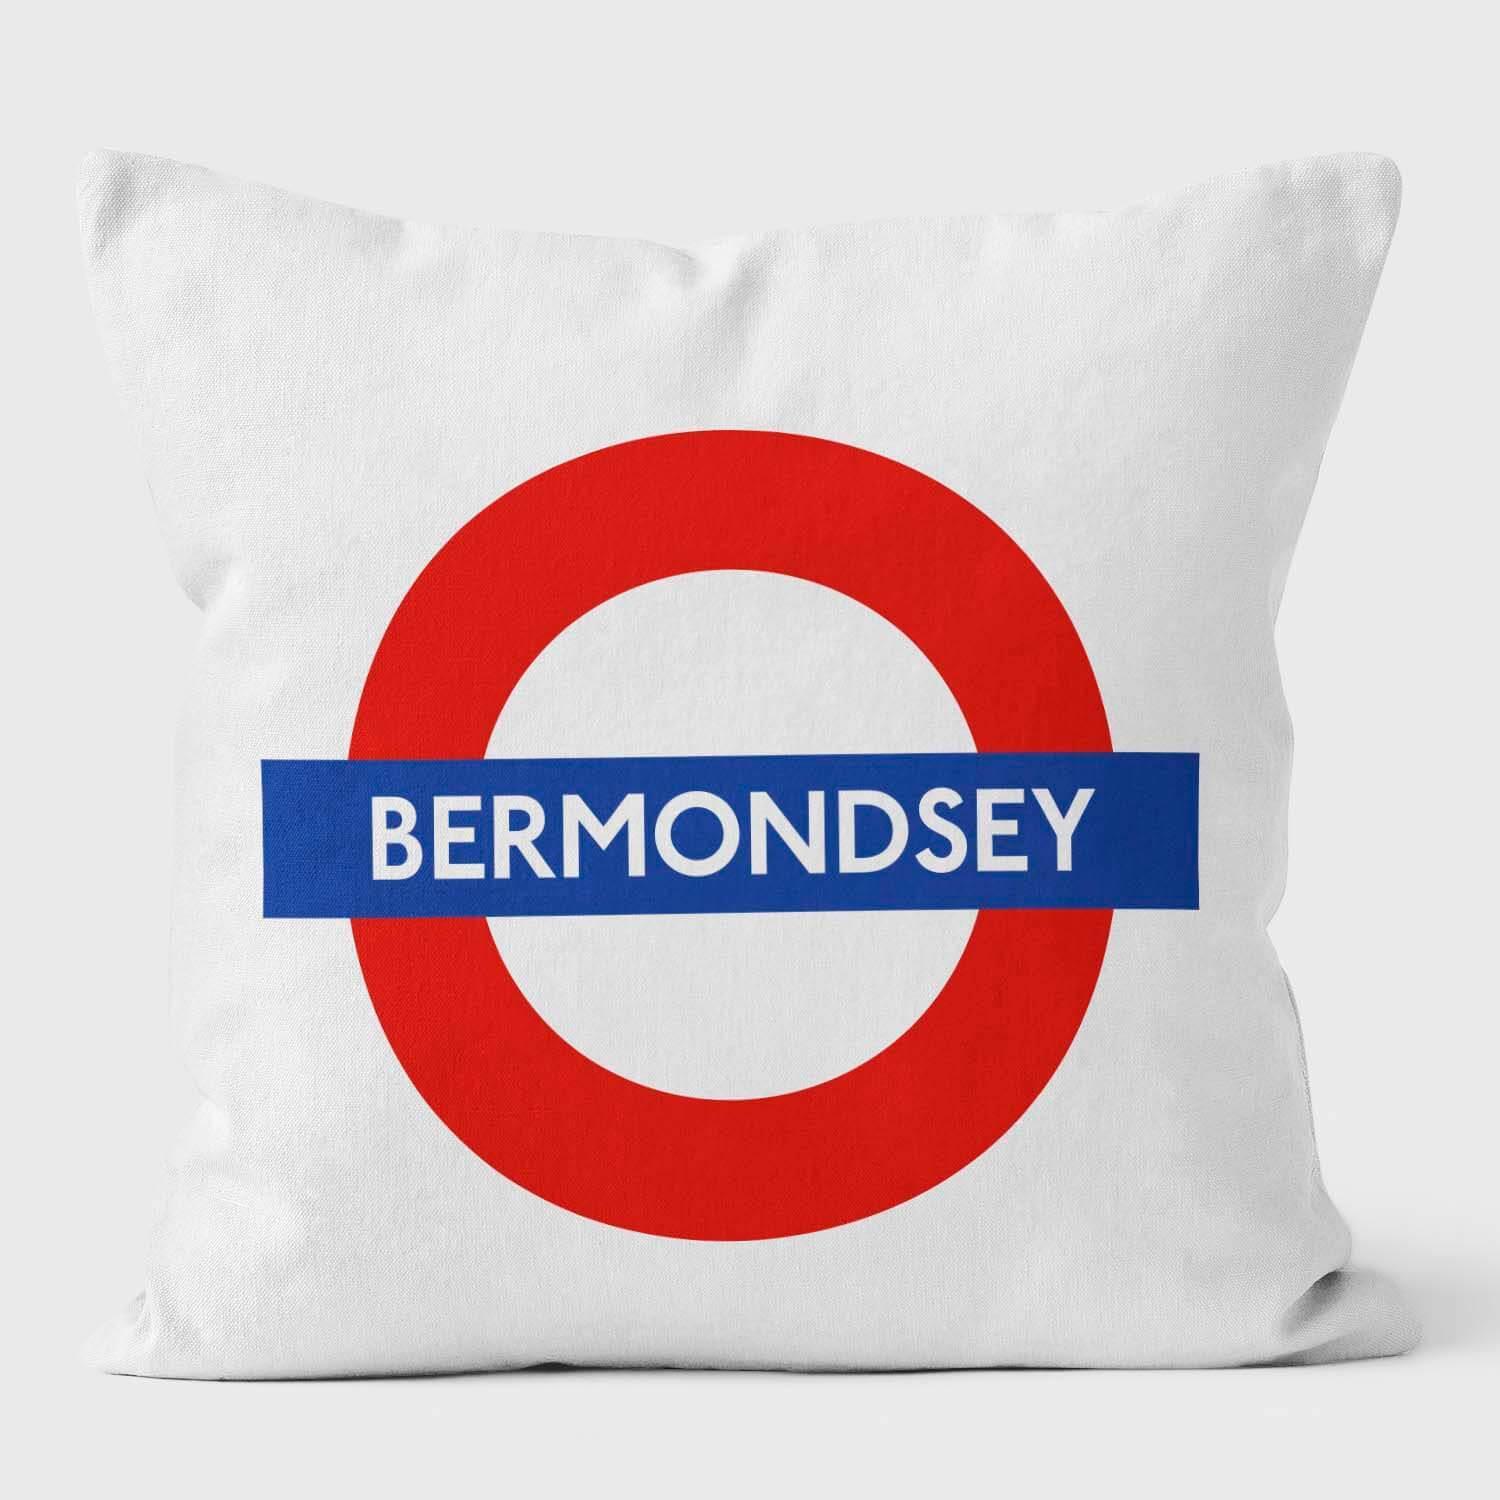 Bermondsey London Underground Tube Station Roundel Cushion - Handmade Cushions UK - WeLoveCushions